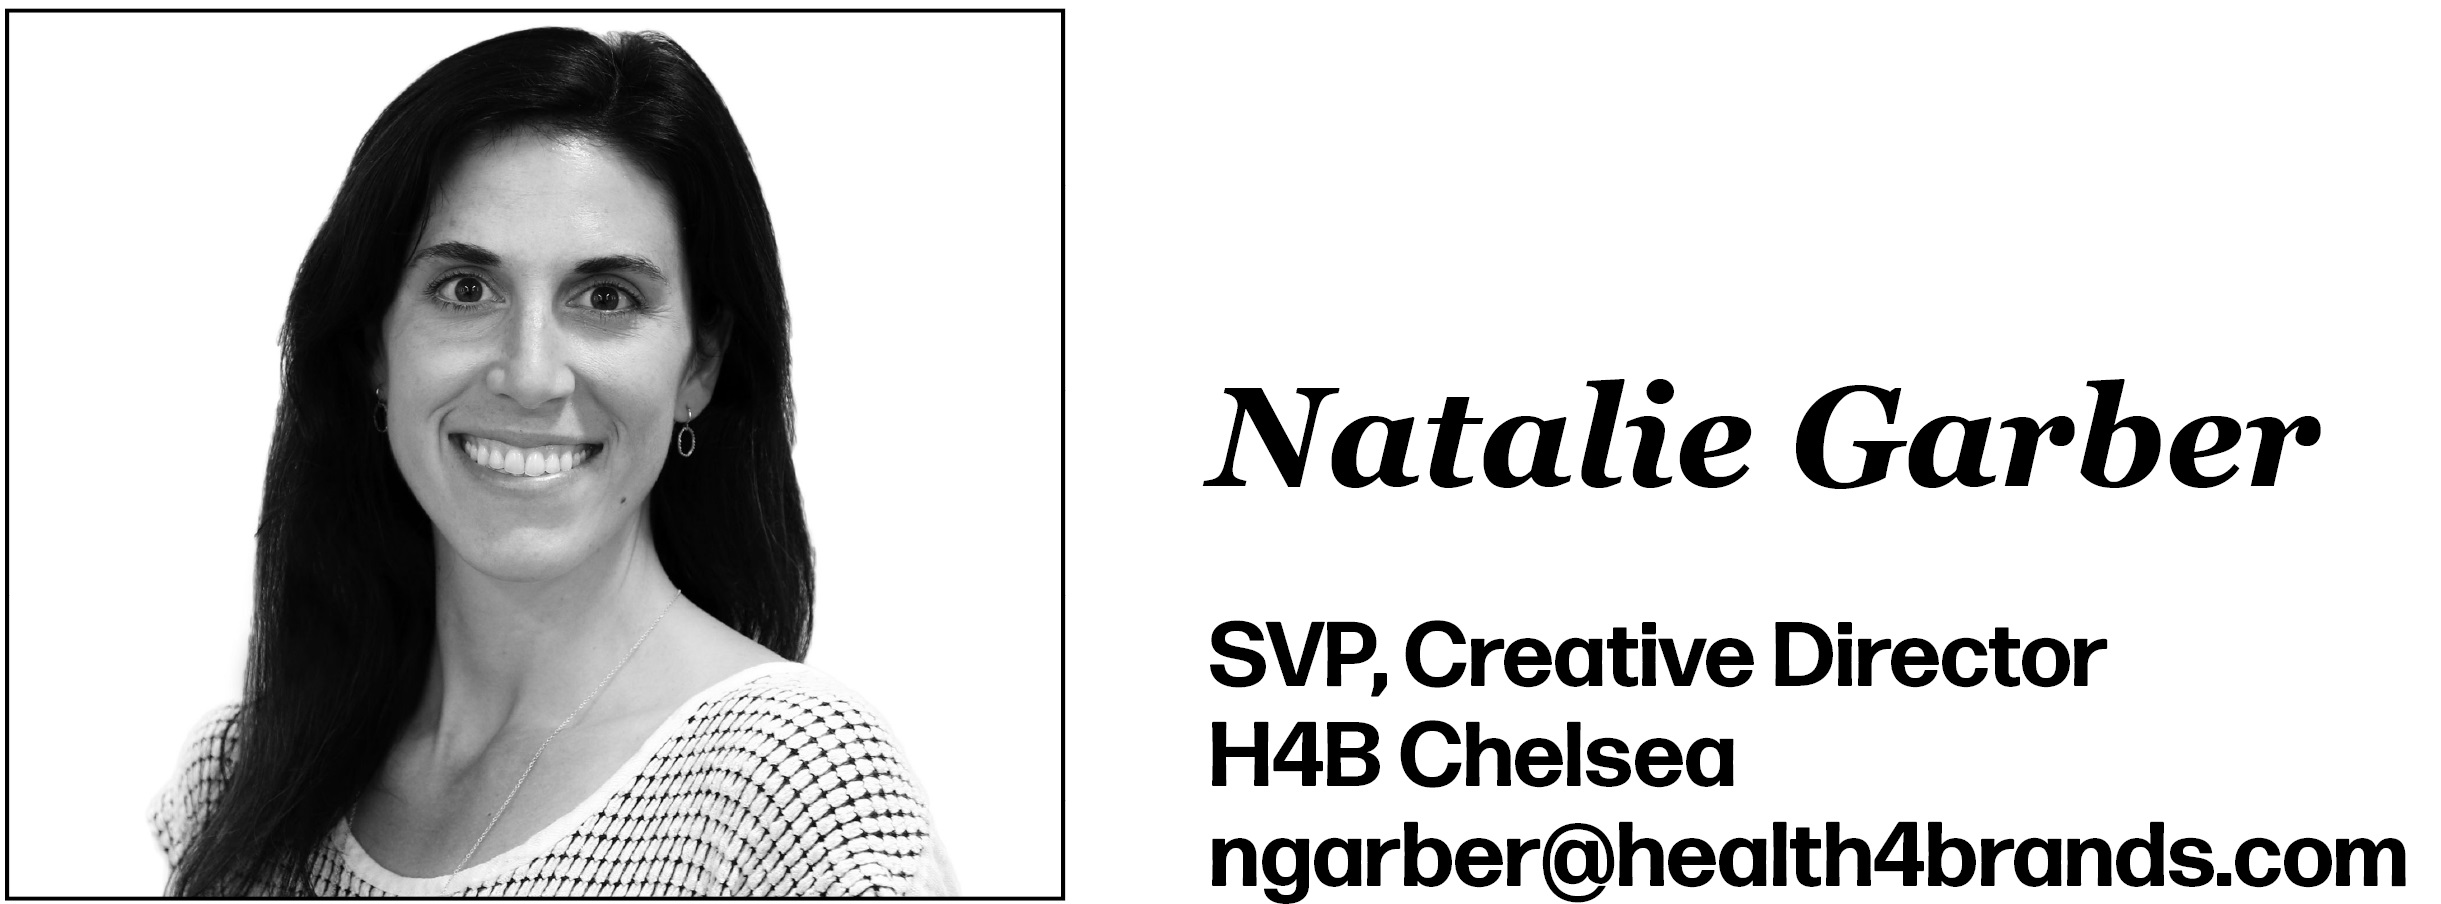 Natalie Garber is SVP, Creative Director at H4B Chelsea. Her email is ngarber@health4brands.com.